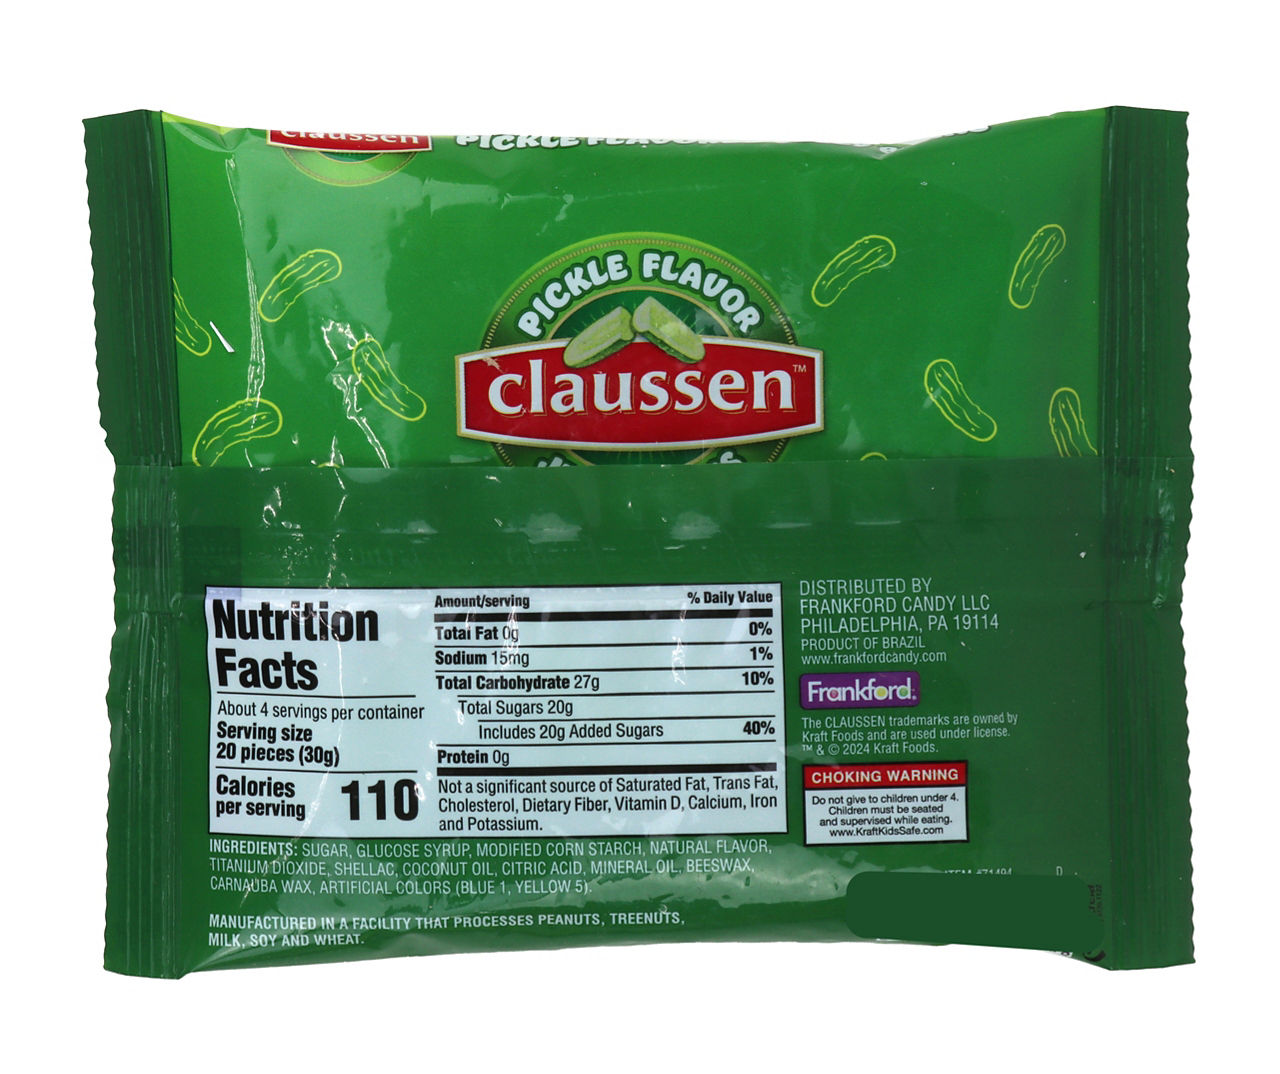 Kraft Claussen Pickle Flavor Jelly Beans, 4 Oz. | Big Lots